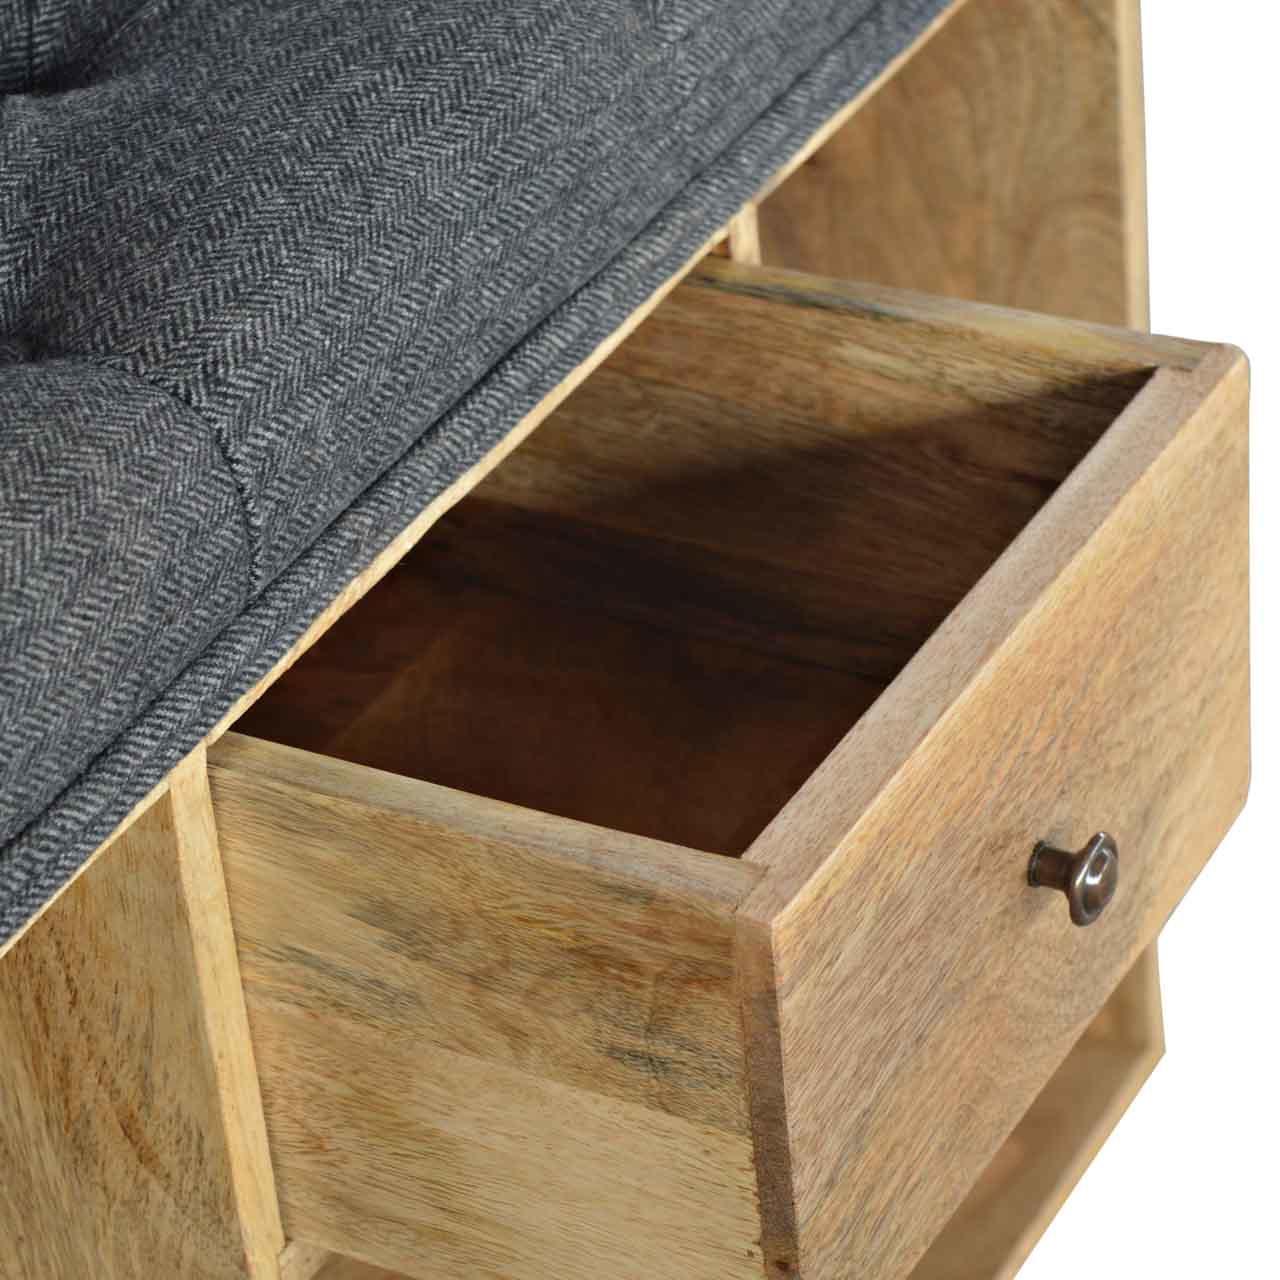 Black tweed 6 slot shoe storage bench - crimblefest furniture - image 7